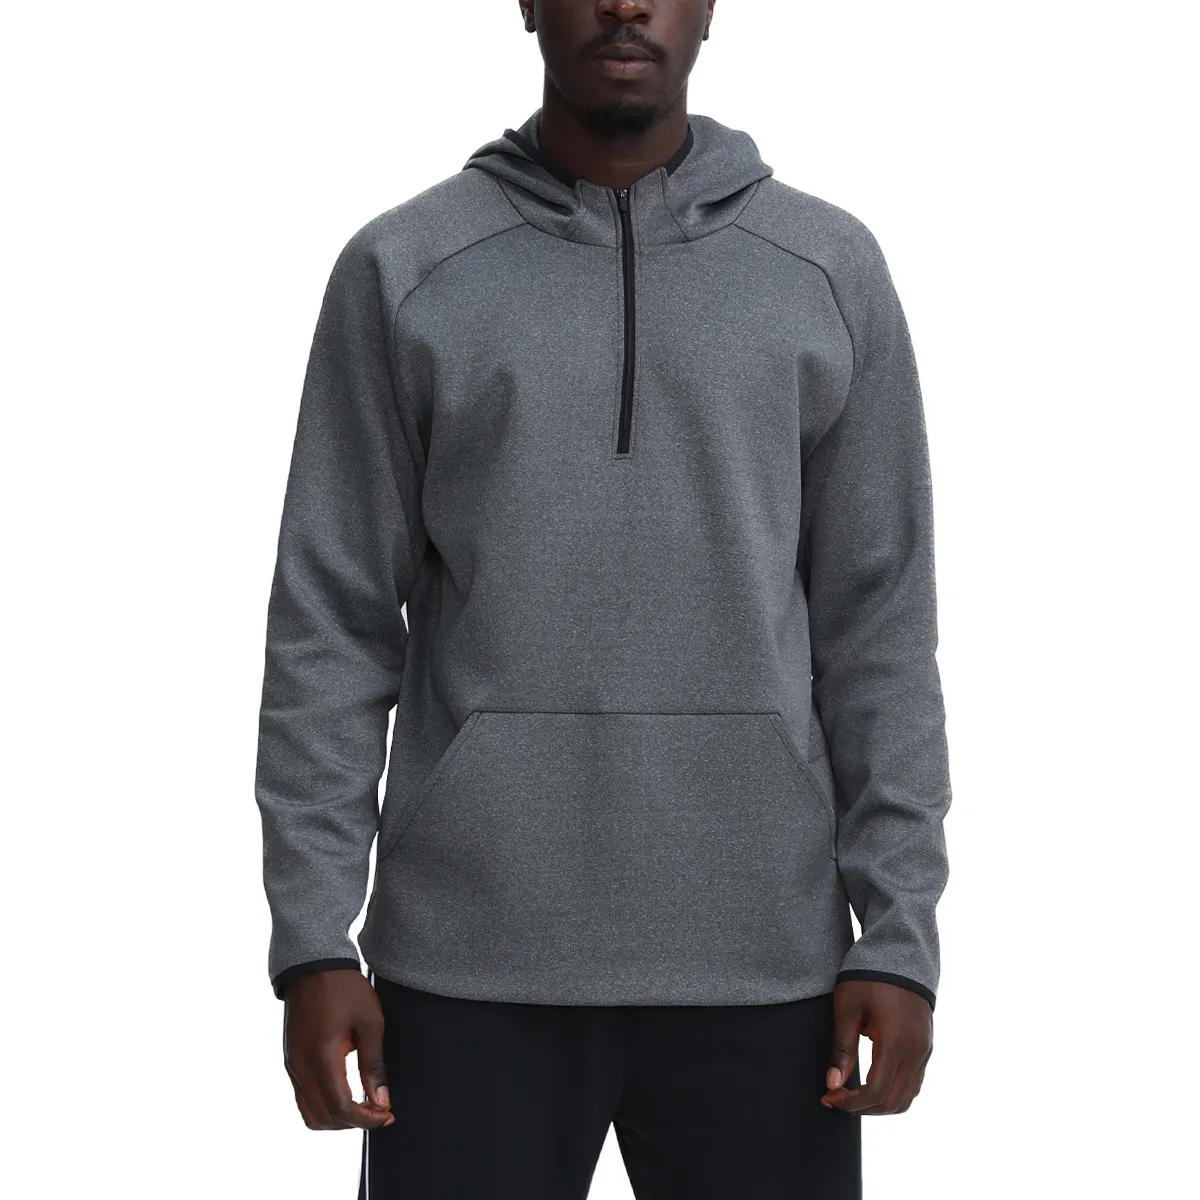 Custom Logo Printed Jackets Half zip Top quality polyester sports pullover hoodies jacket Men's fitness shirt winter sportswear